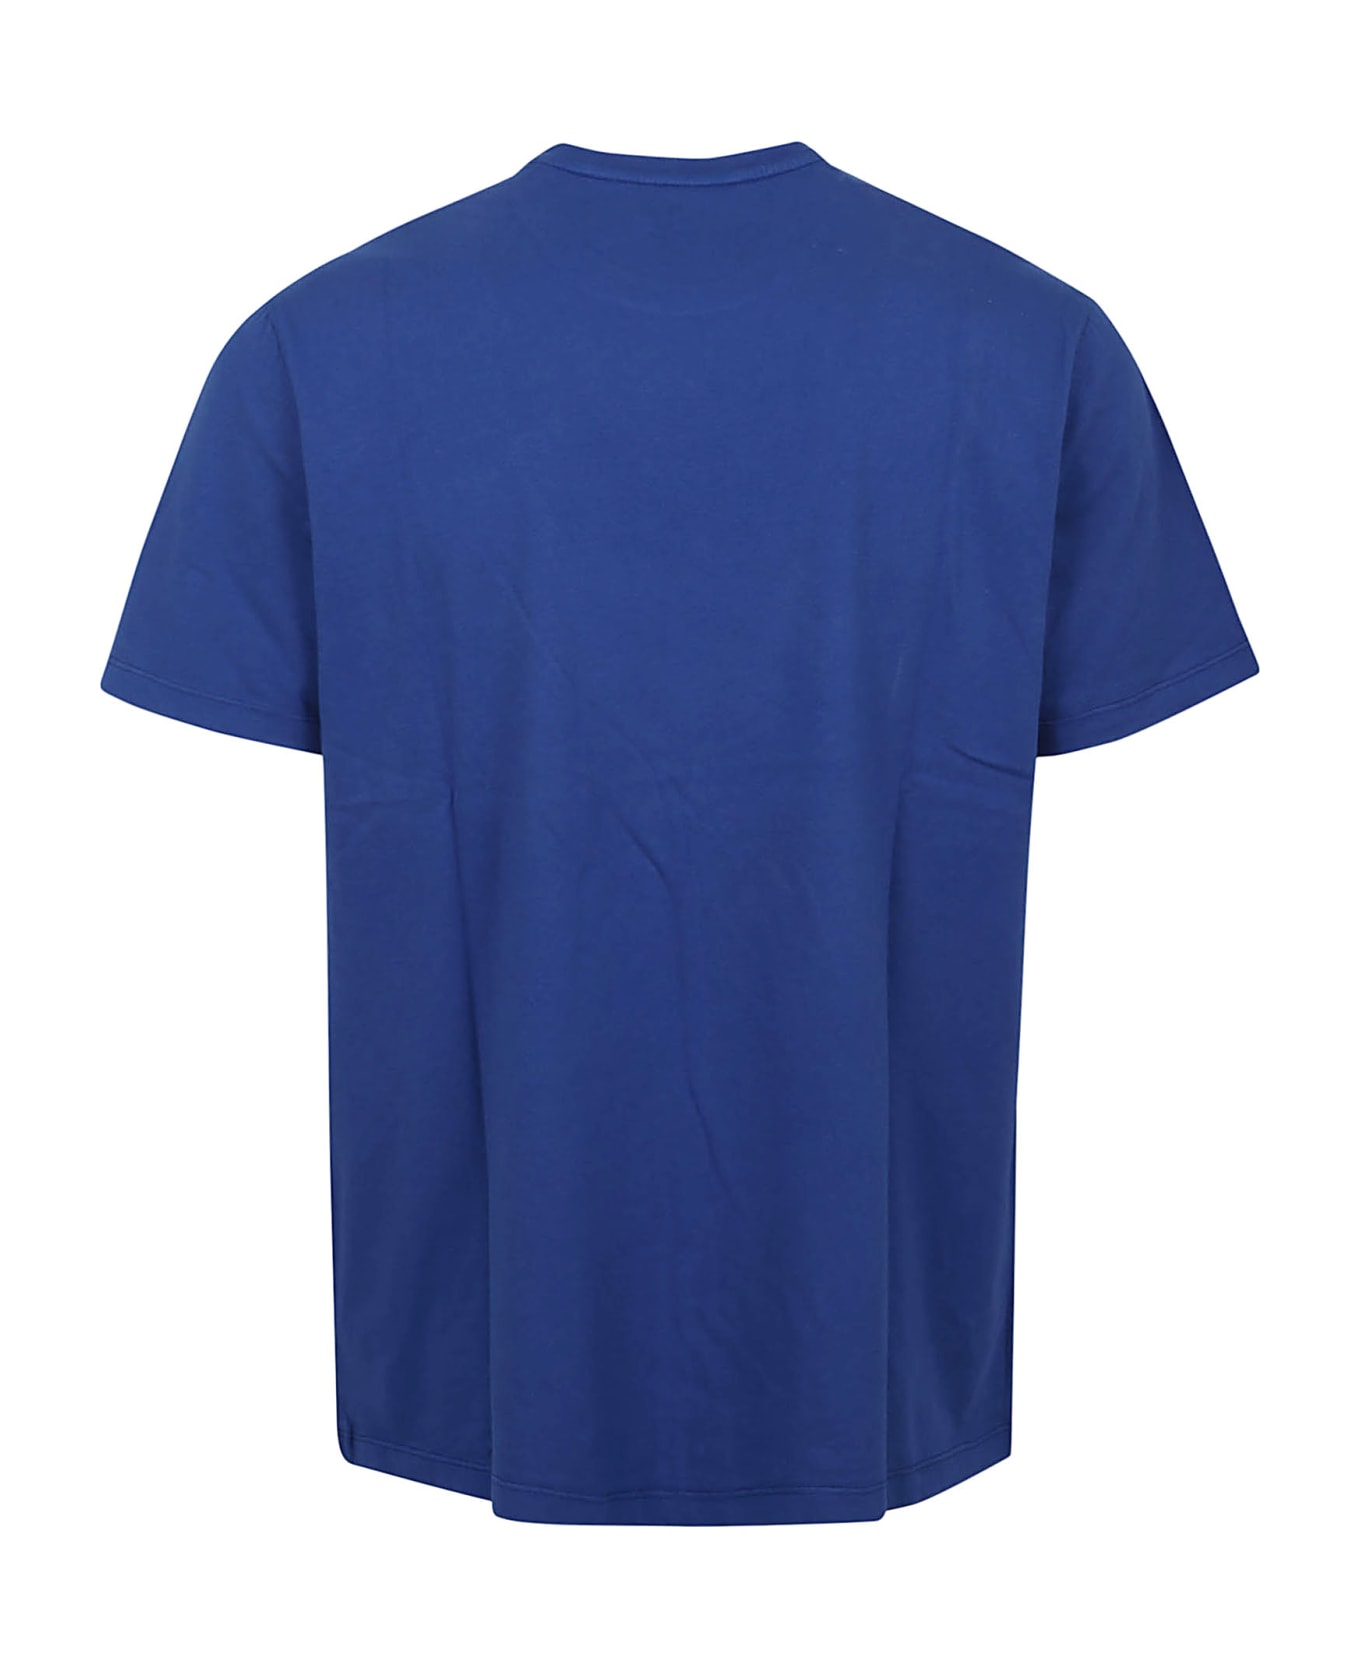 Majestic Filatures T-shirt - Bleu Roi